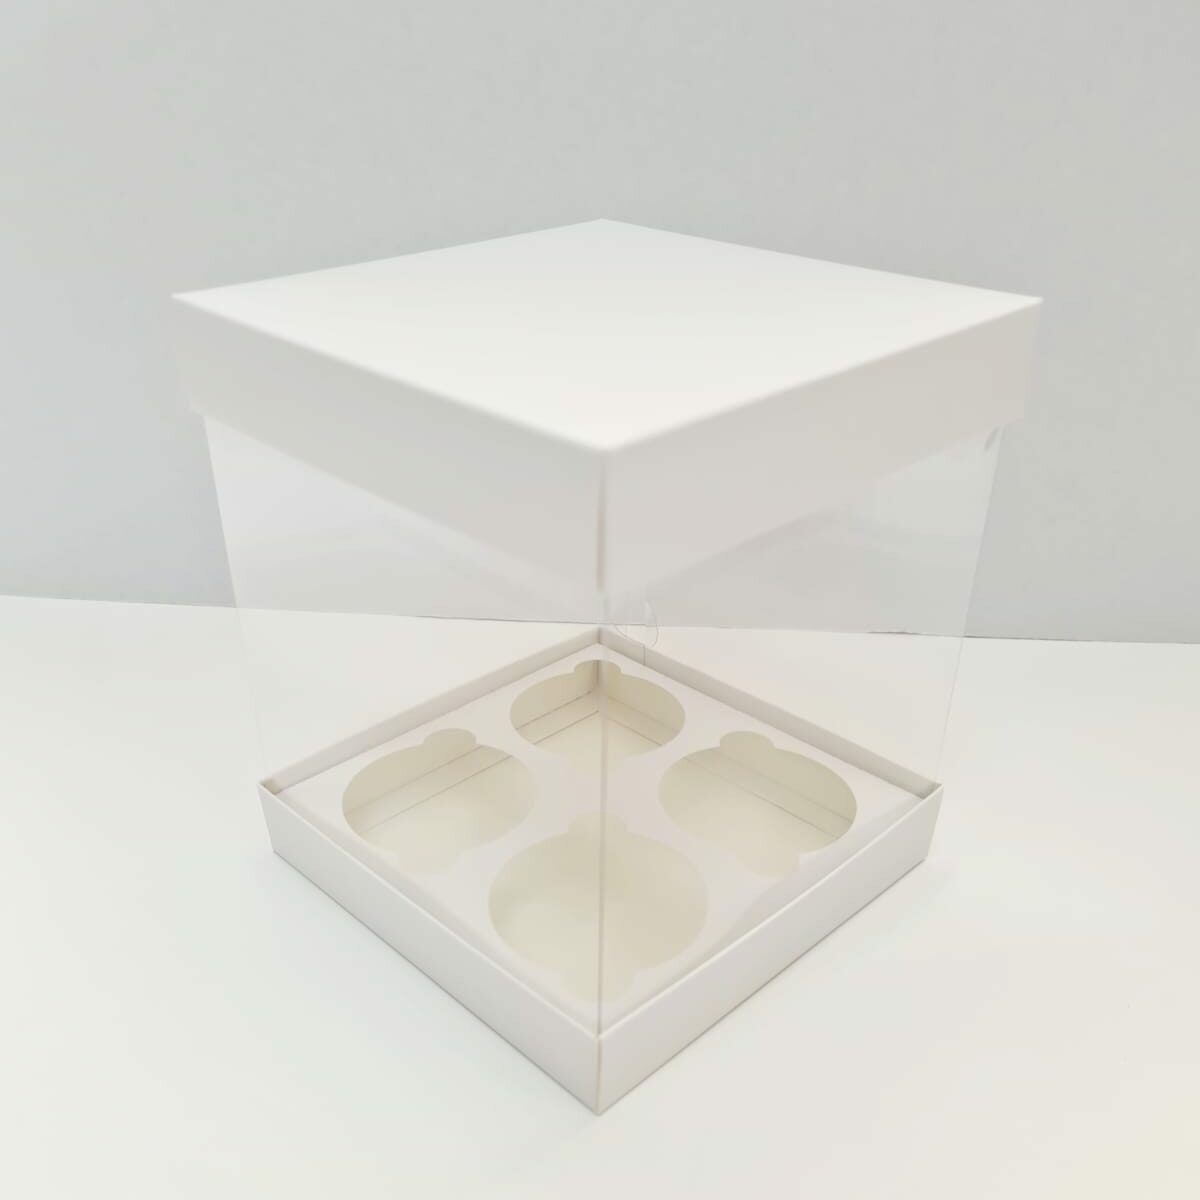 Коробка для трайфлов прозрачная, размер 160х160х180, цвет белый